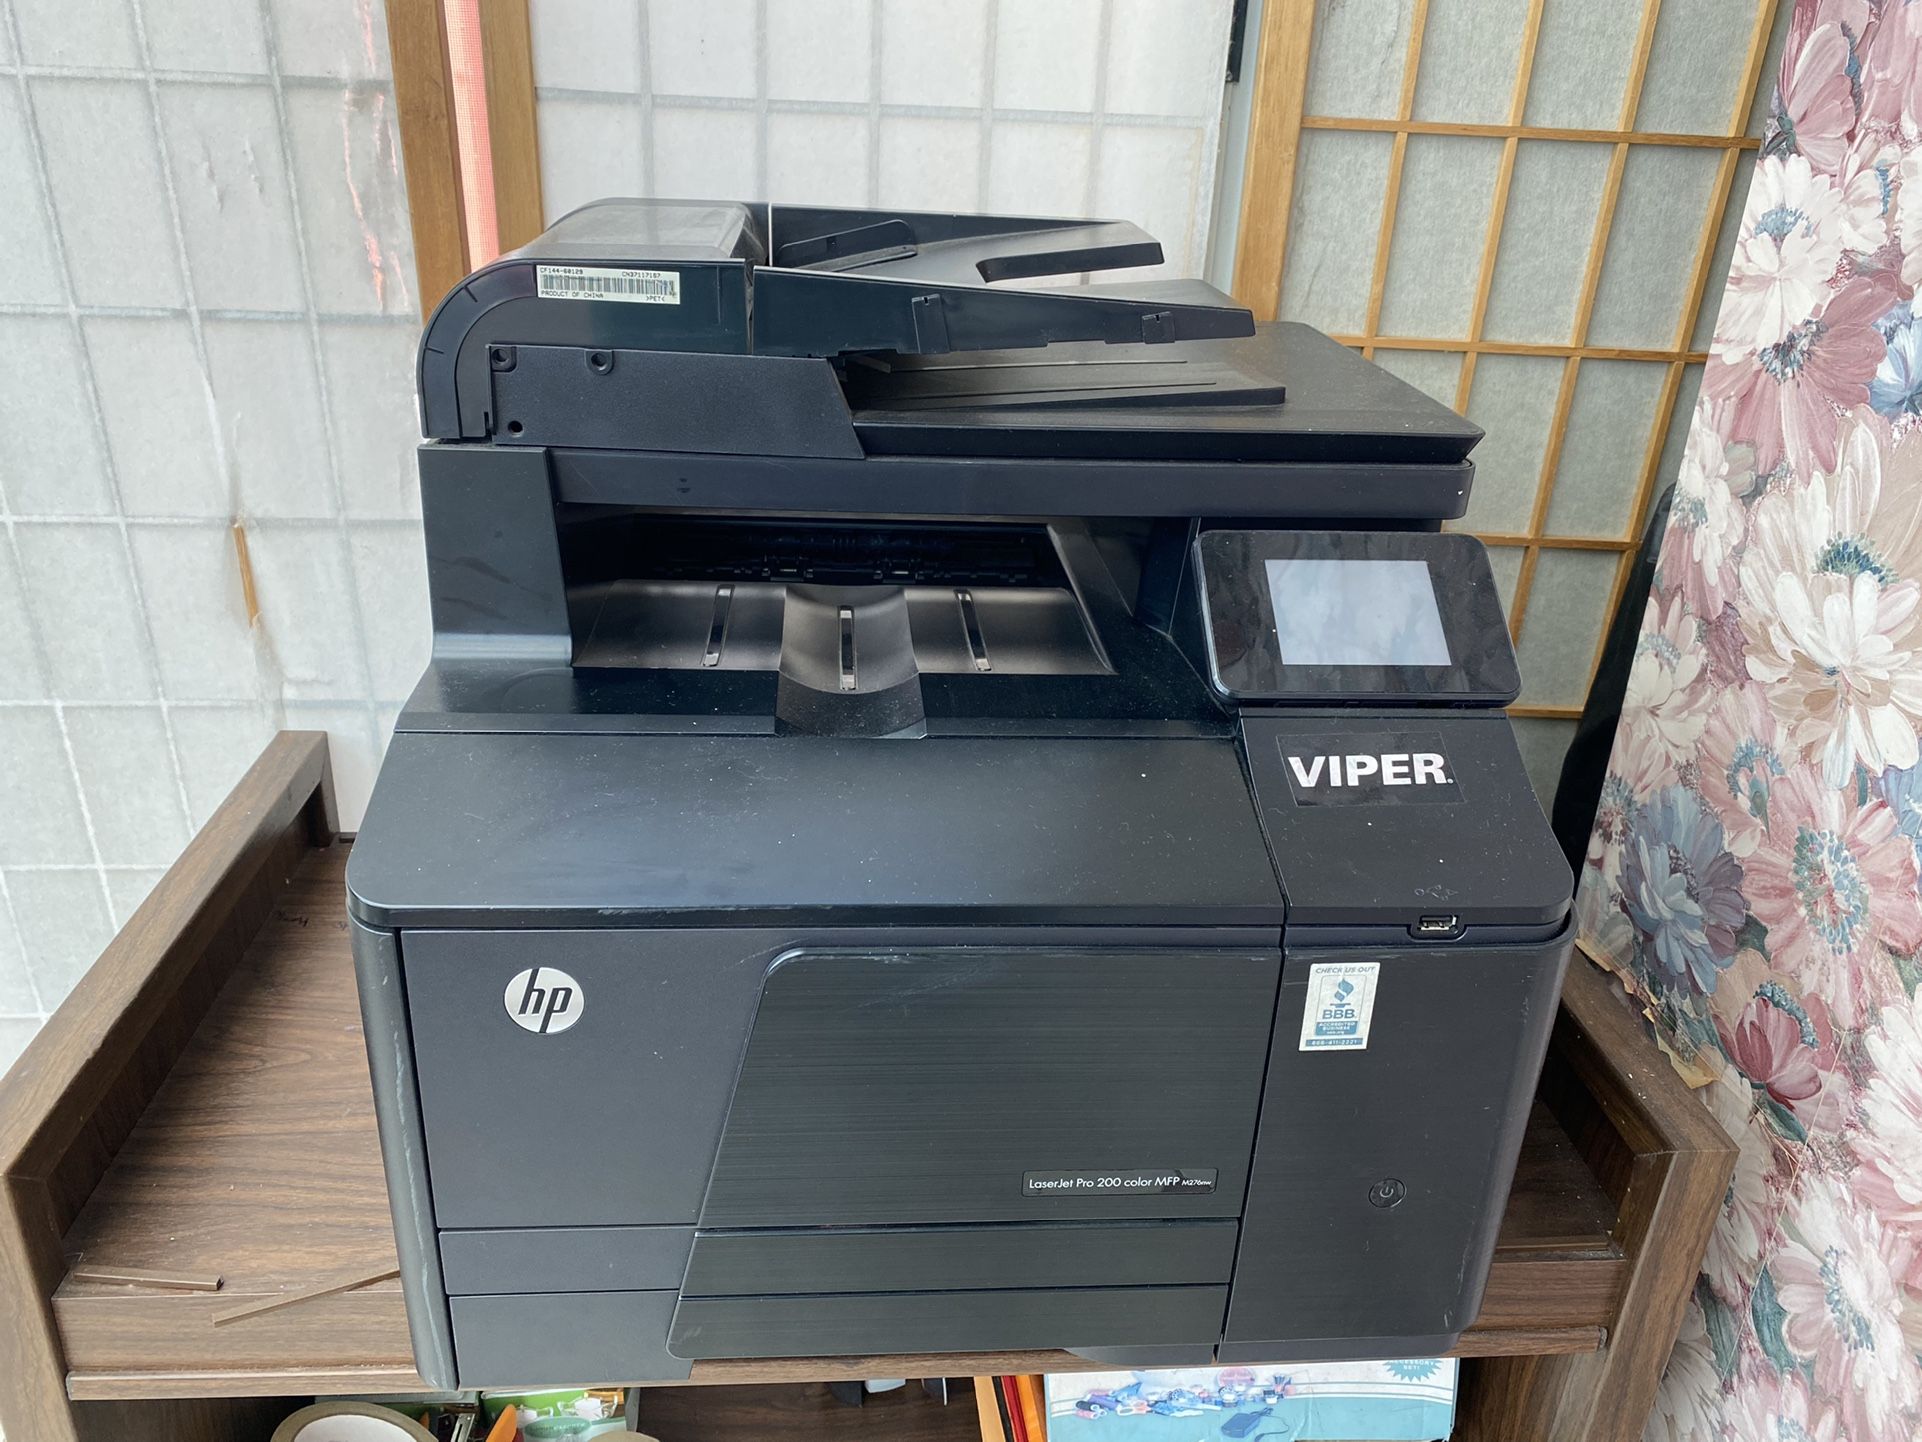 Fax machine and printing